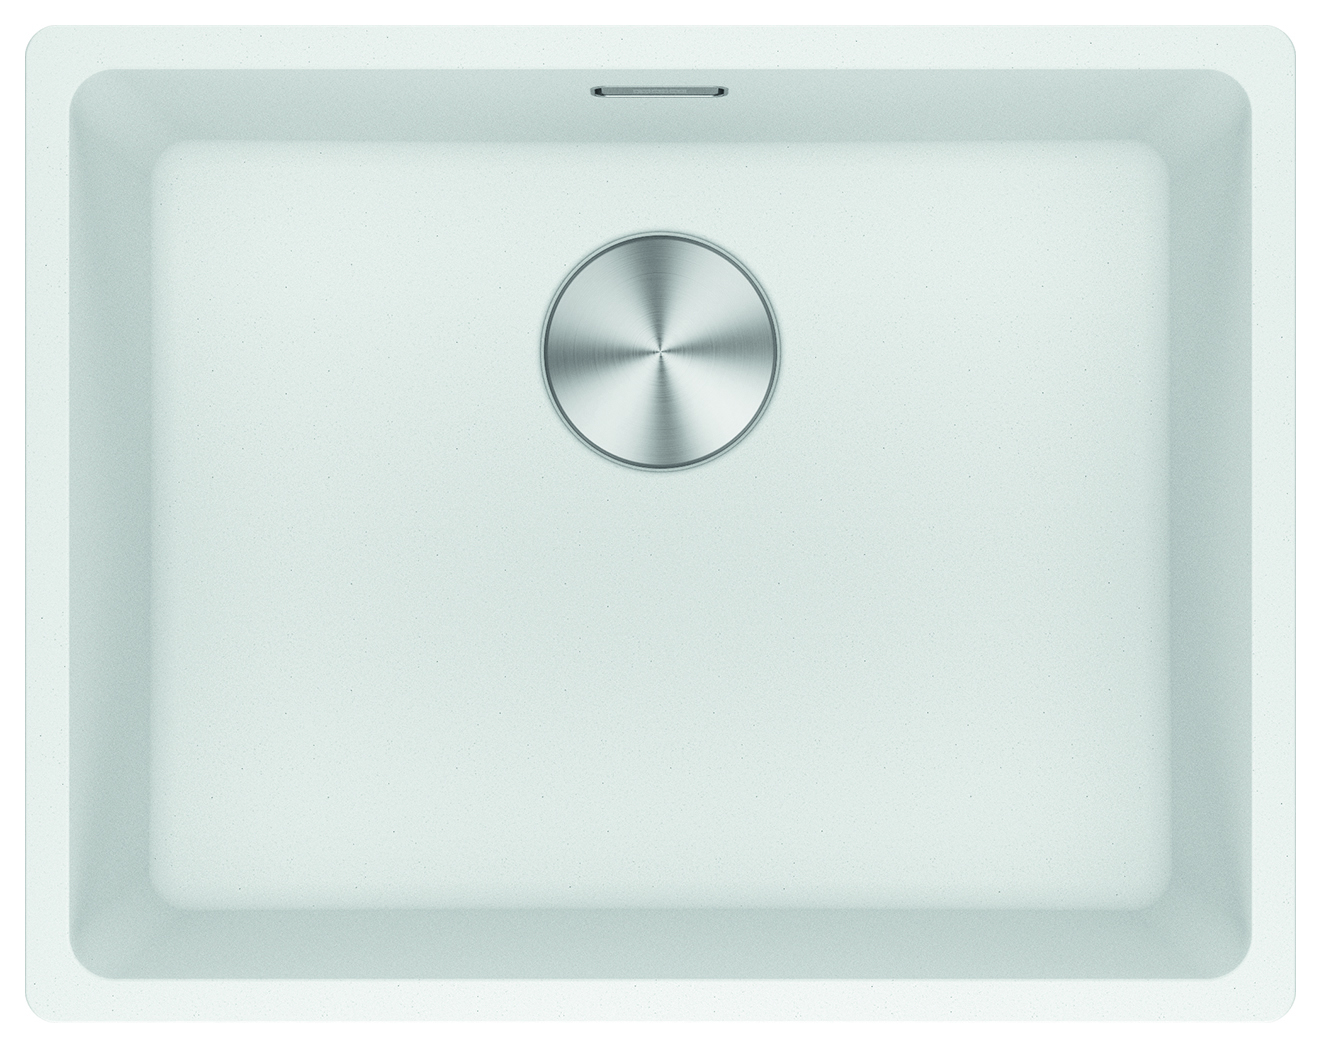 Image of Franke Maris Granite 1 Bowl Undermount Kitchen Sink - White